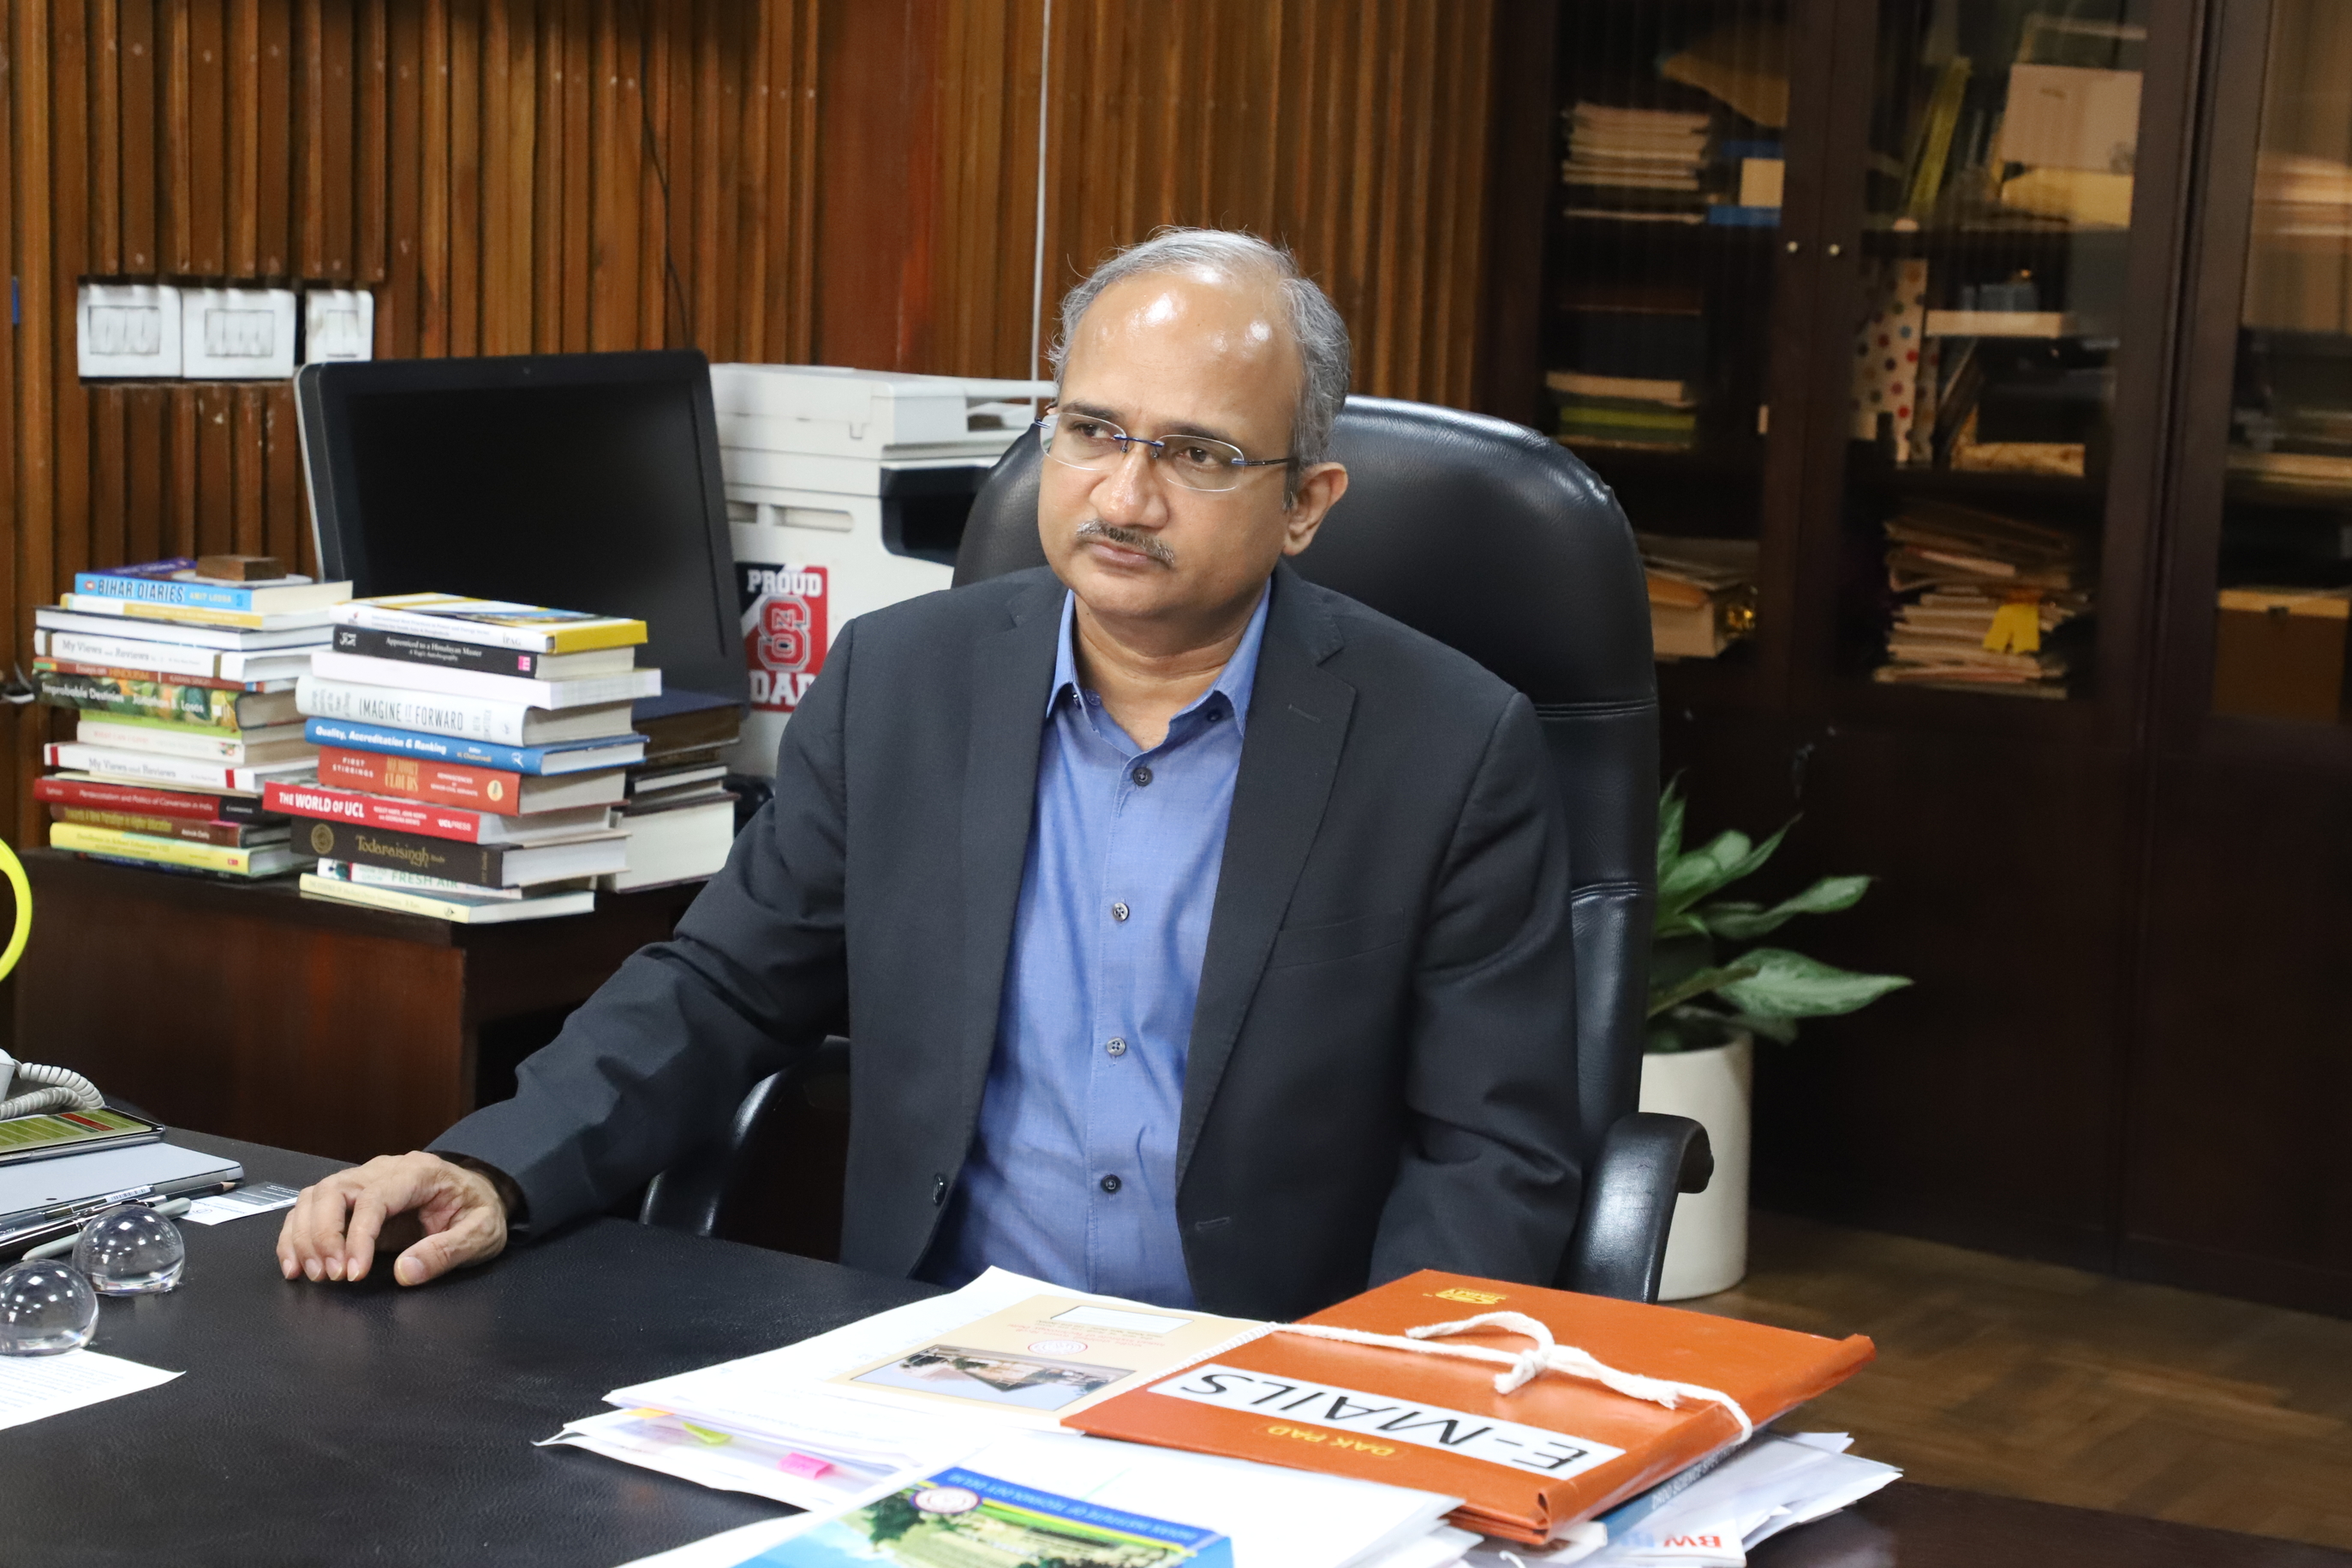 Besides global ranking, Globalization of IIT Delhi to open new avenues: Prof. V. Ramgopal Rao